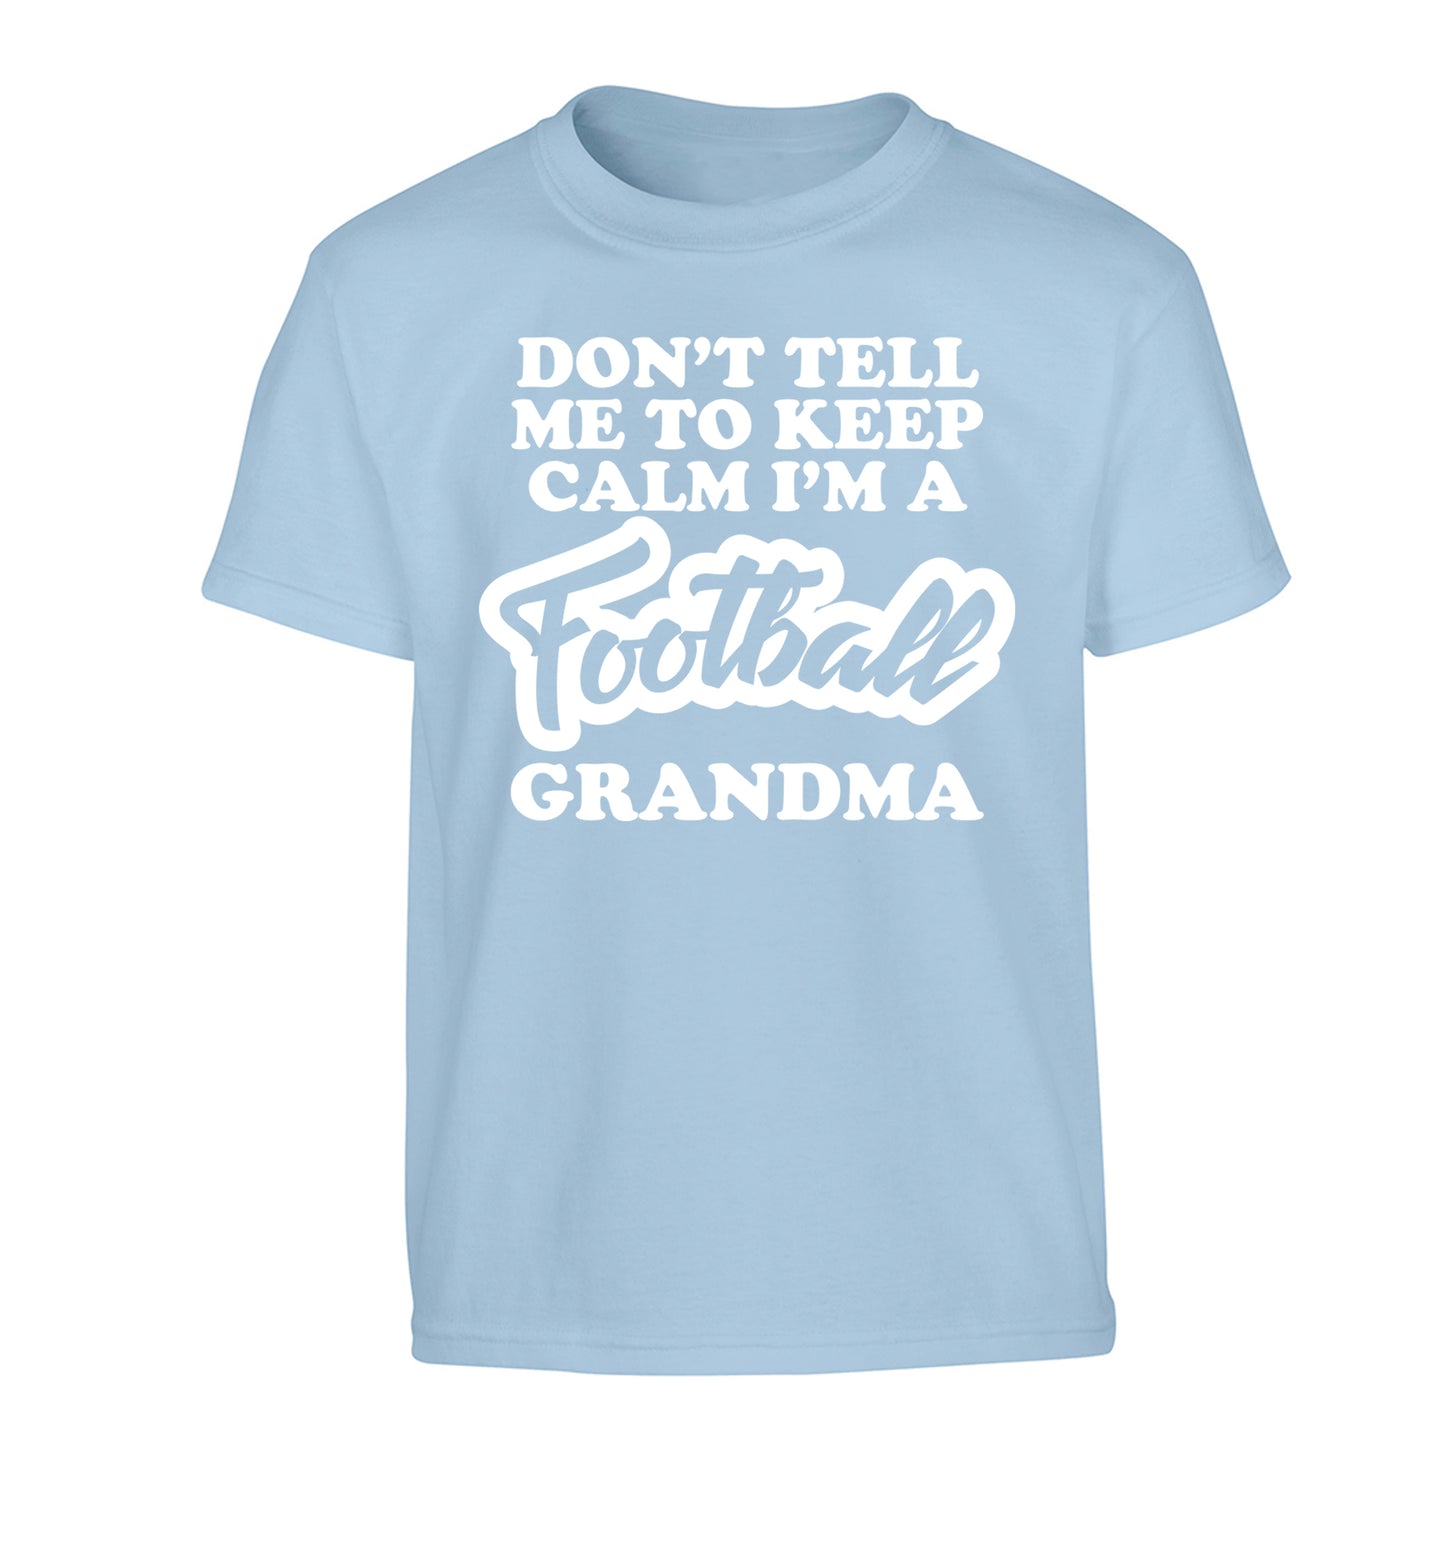 Don't tell me to keep calm I'm a football grandma Children's light blue Tshirt 12-14 Years